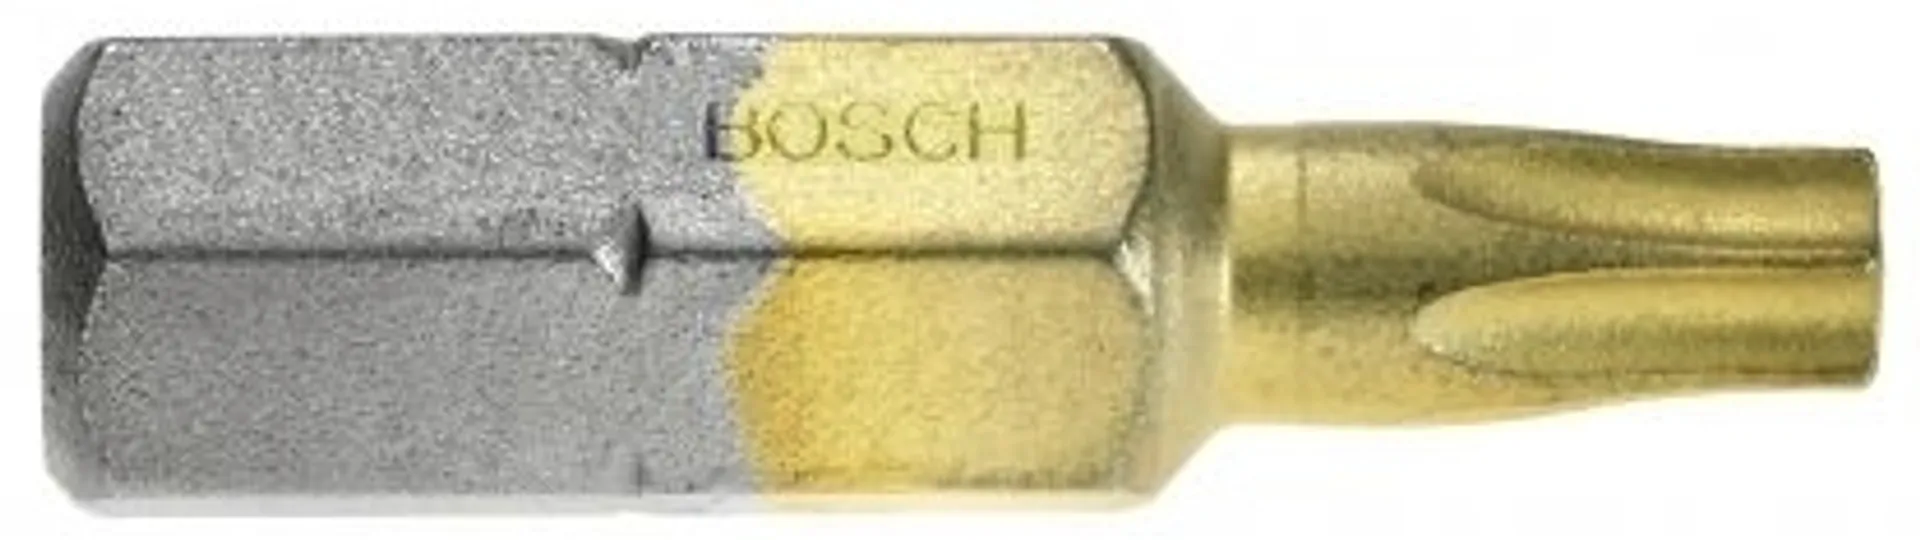 Bosch ruuvauskärki TORX 20 Maxgrip 25 mm 3 kpl